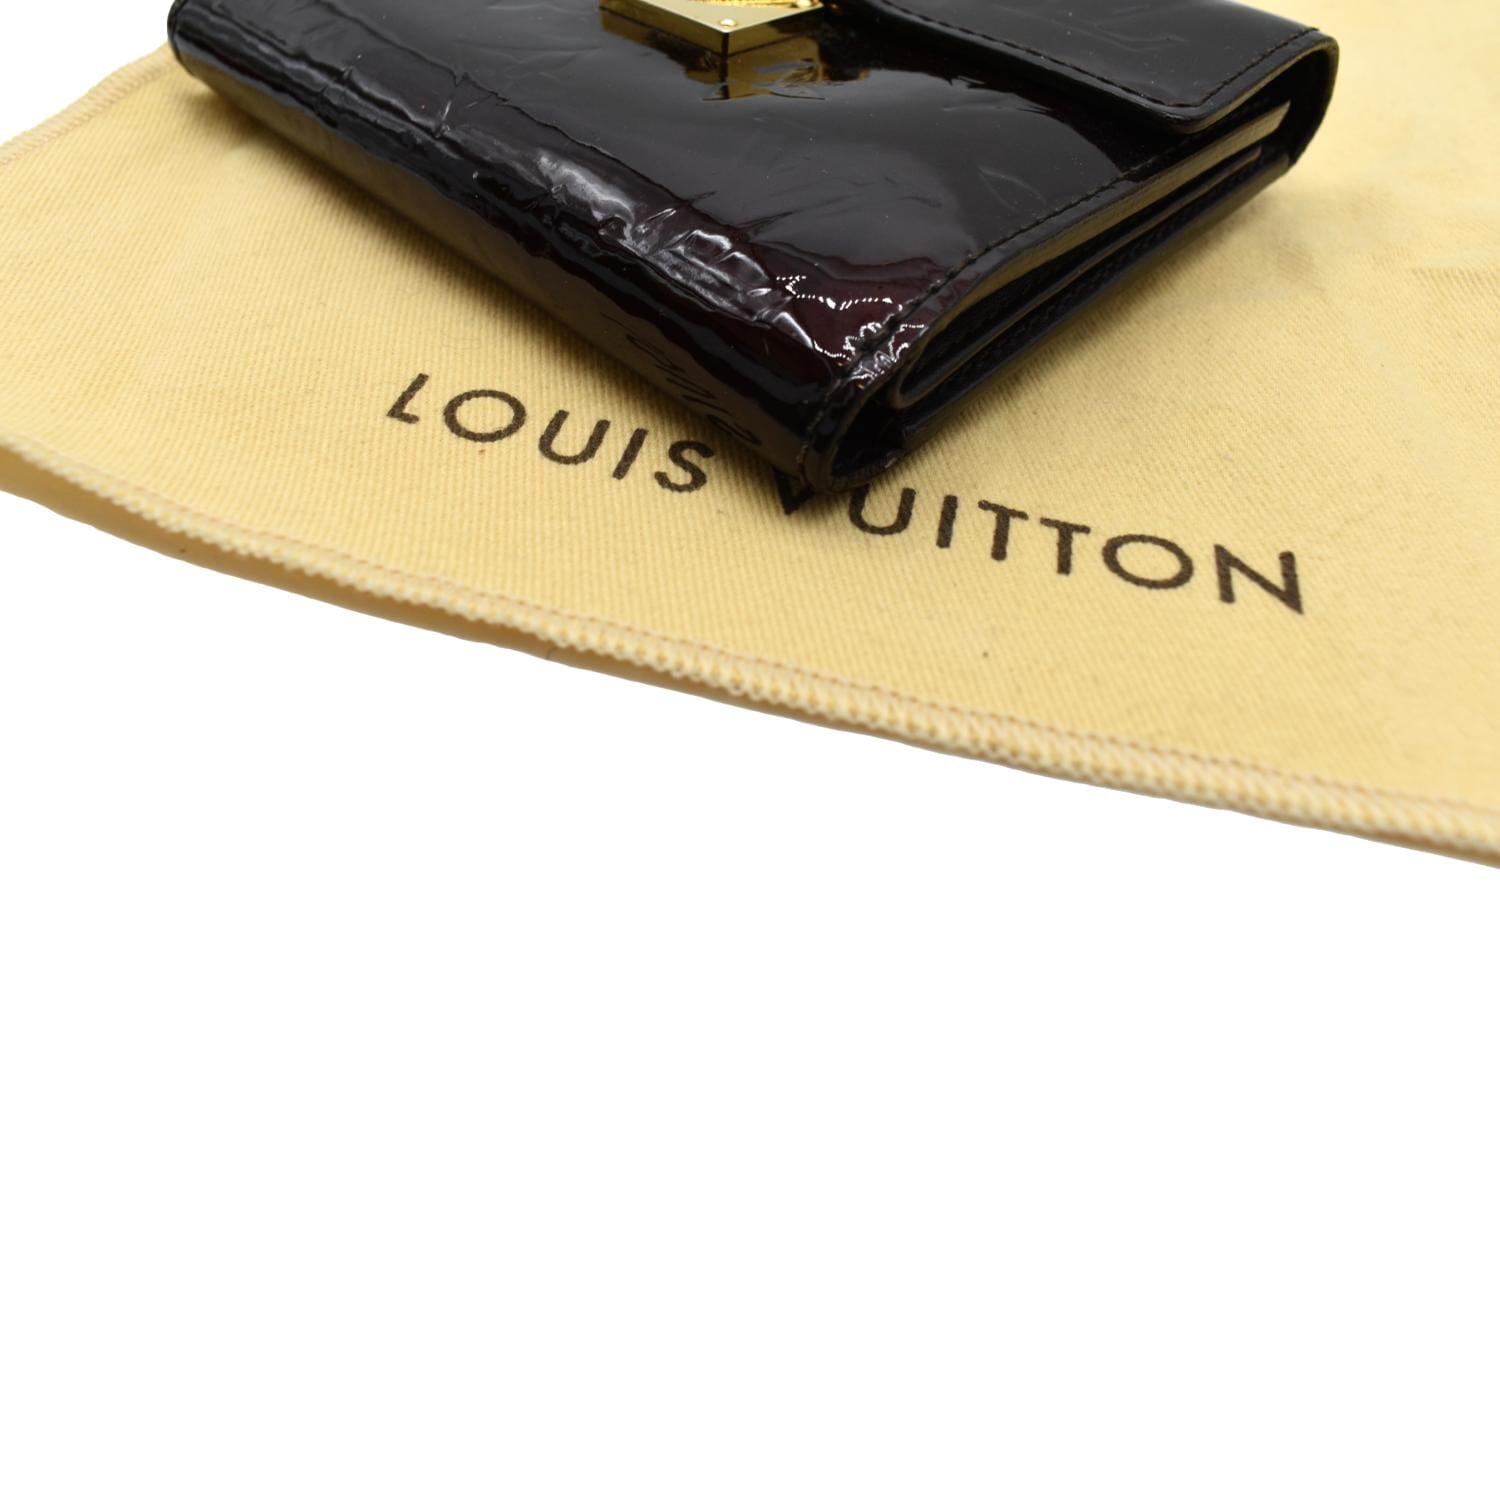 Louis Vuitton Gold-Tone LV Logo Black Vernis Louise Wallet at